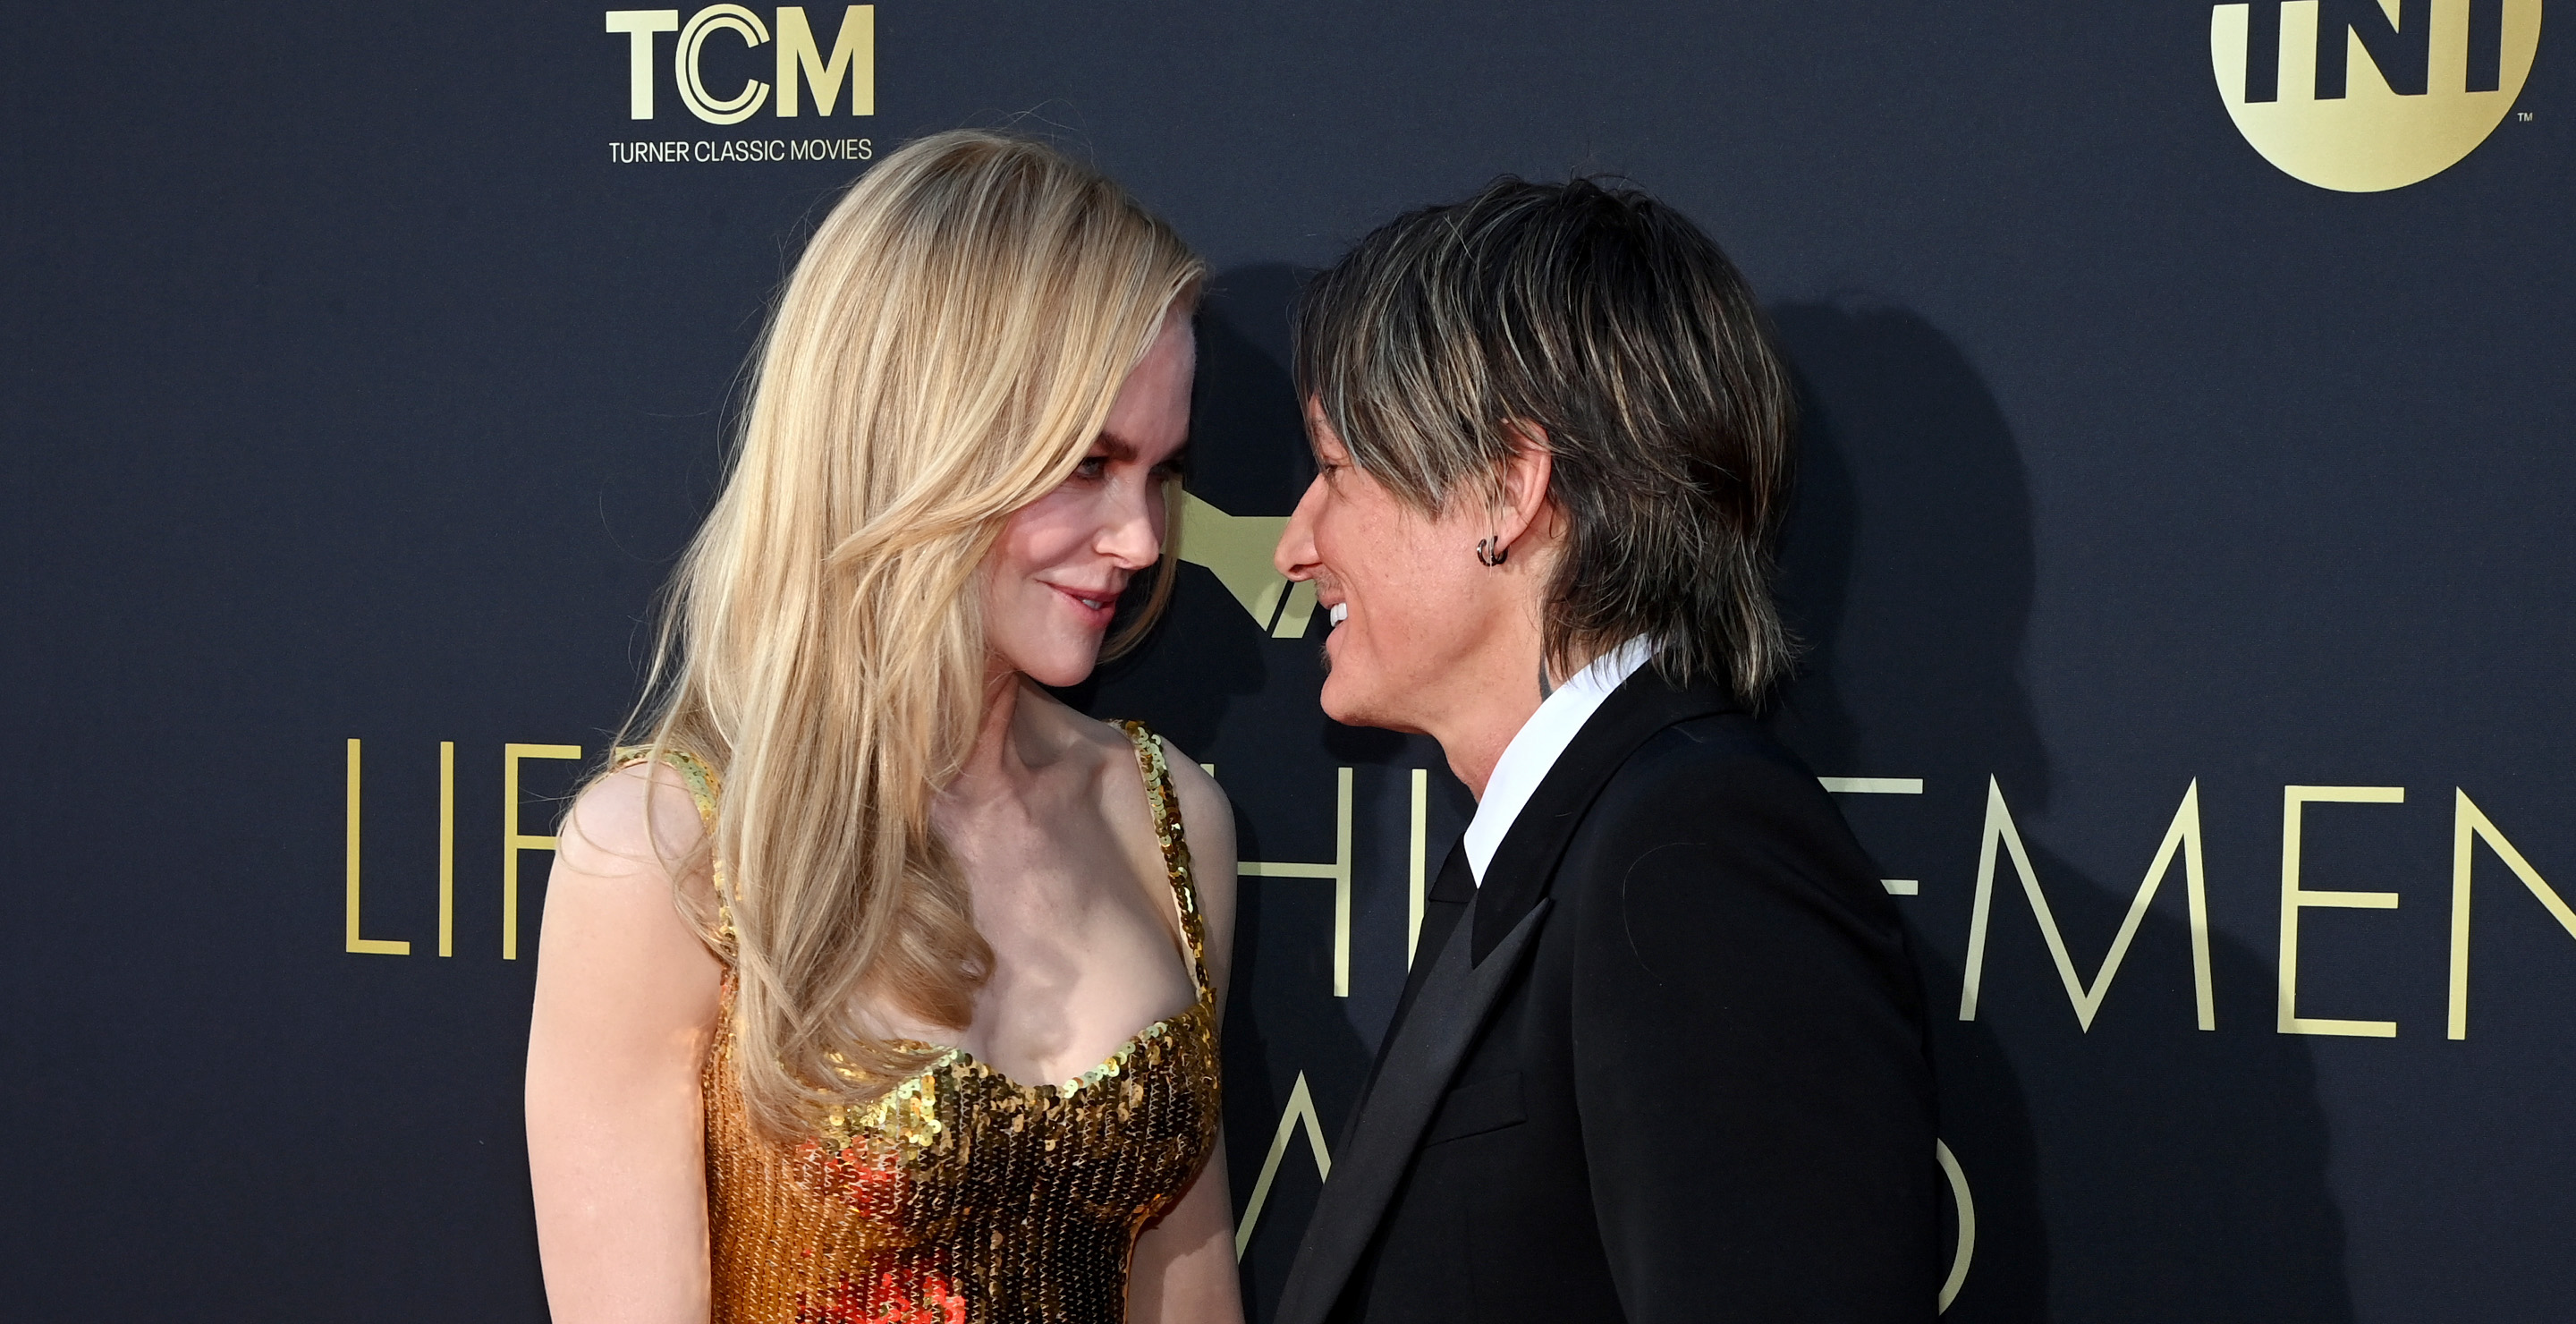 Keith Urban Honors Wife Nicole Kidman at Awards Show